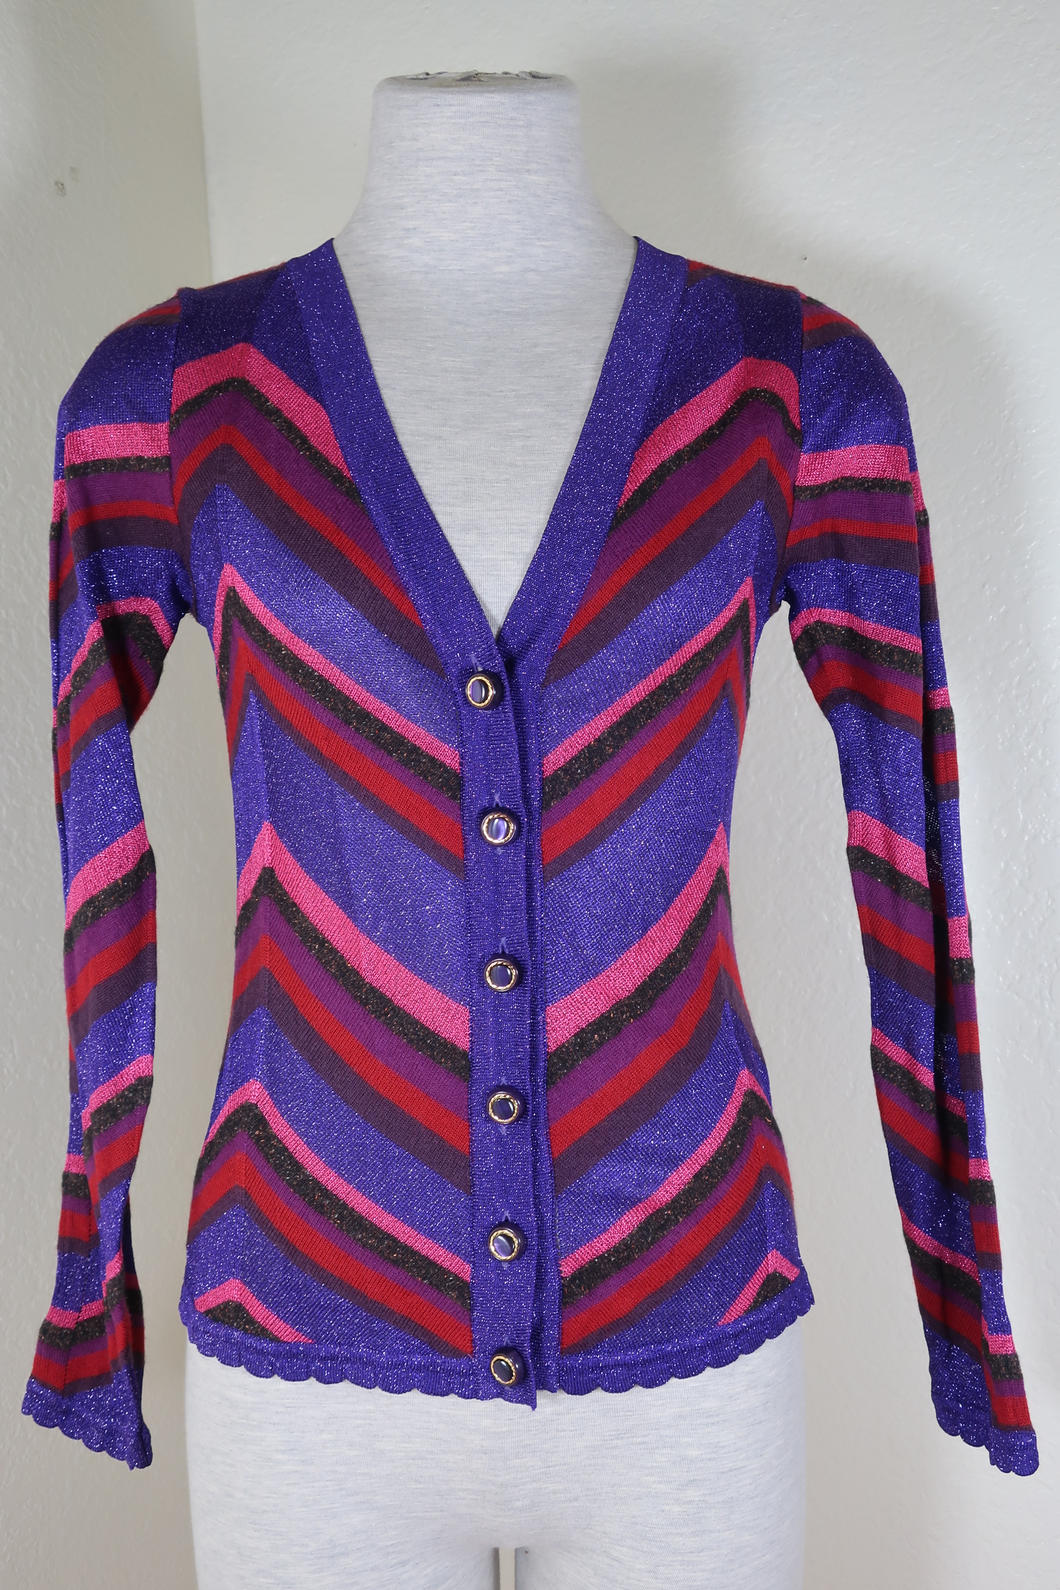 Dolce & GABBANA Purple Pink Red Knitted Sweater Blazer Jacket Top Cardigan S 2 3 4